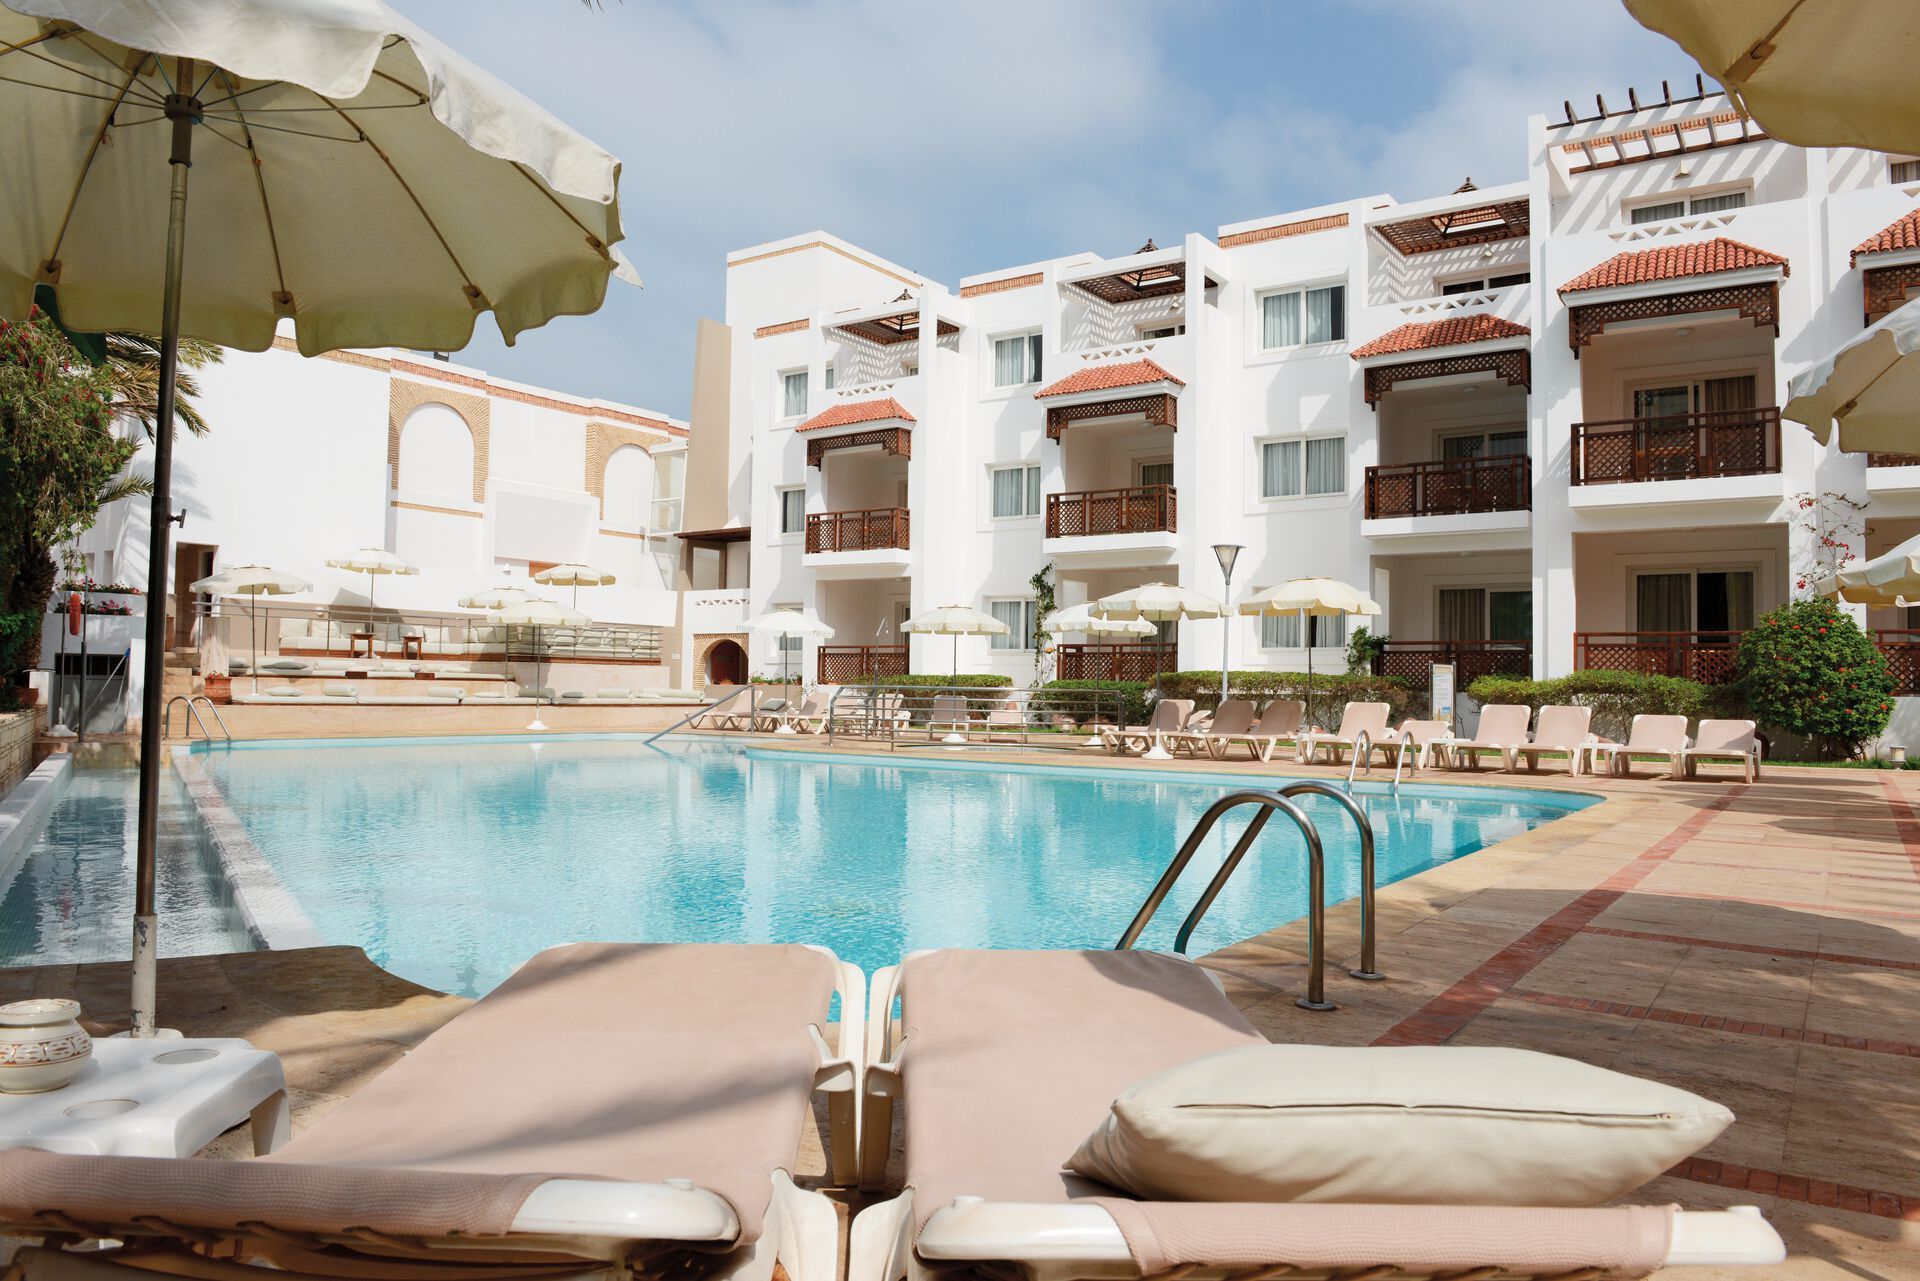 Maroc - Agadir - Hôtel Timoulay & Spa 4*